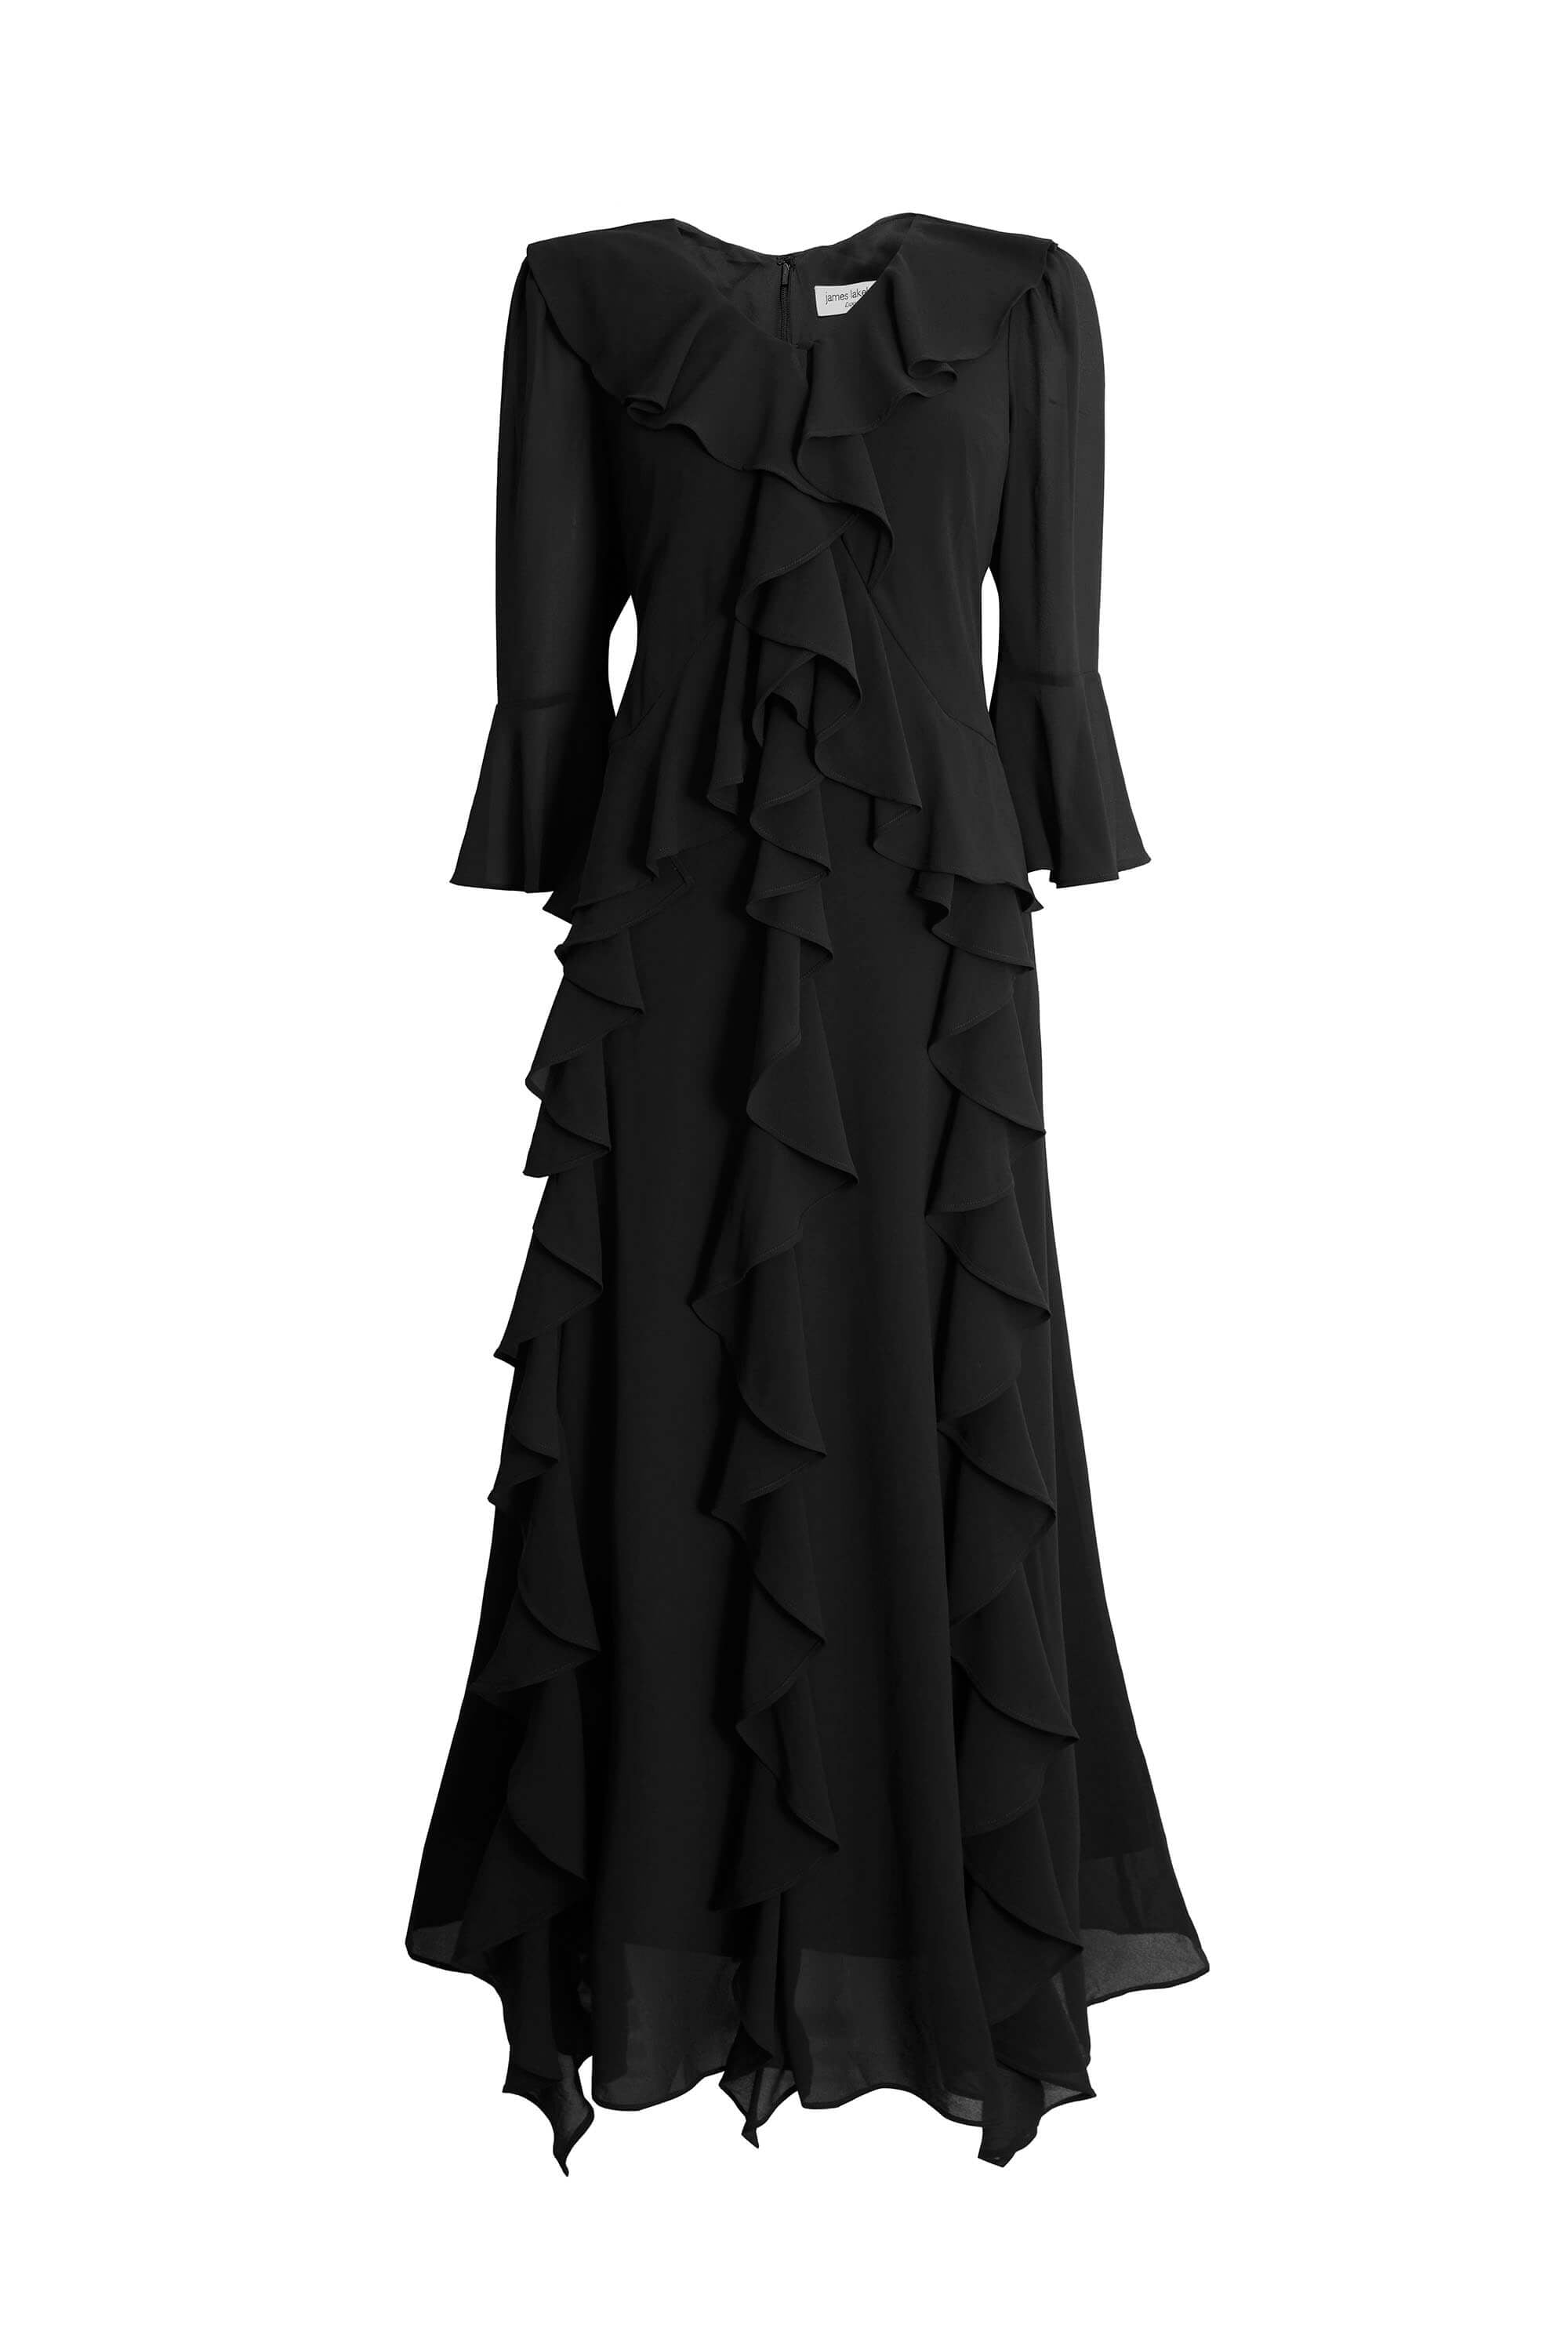 Women’s V-Neck Chiffon Ruffle Dress In Black Extra Small James Lakeland